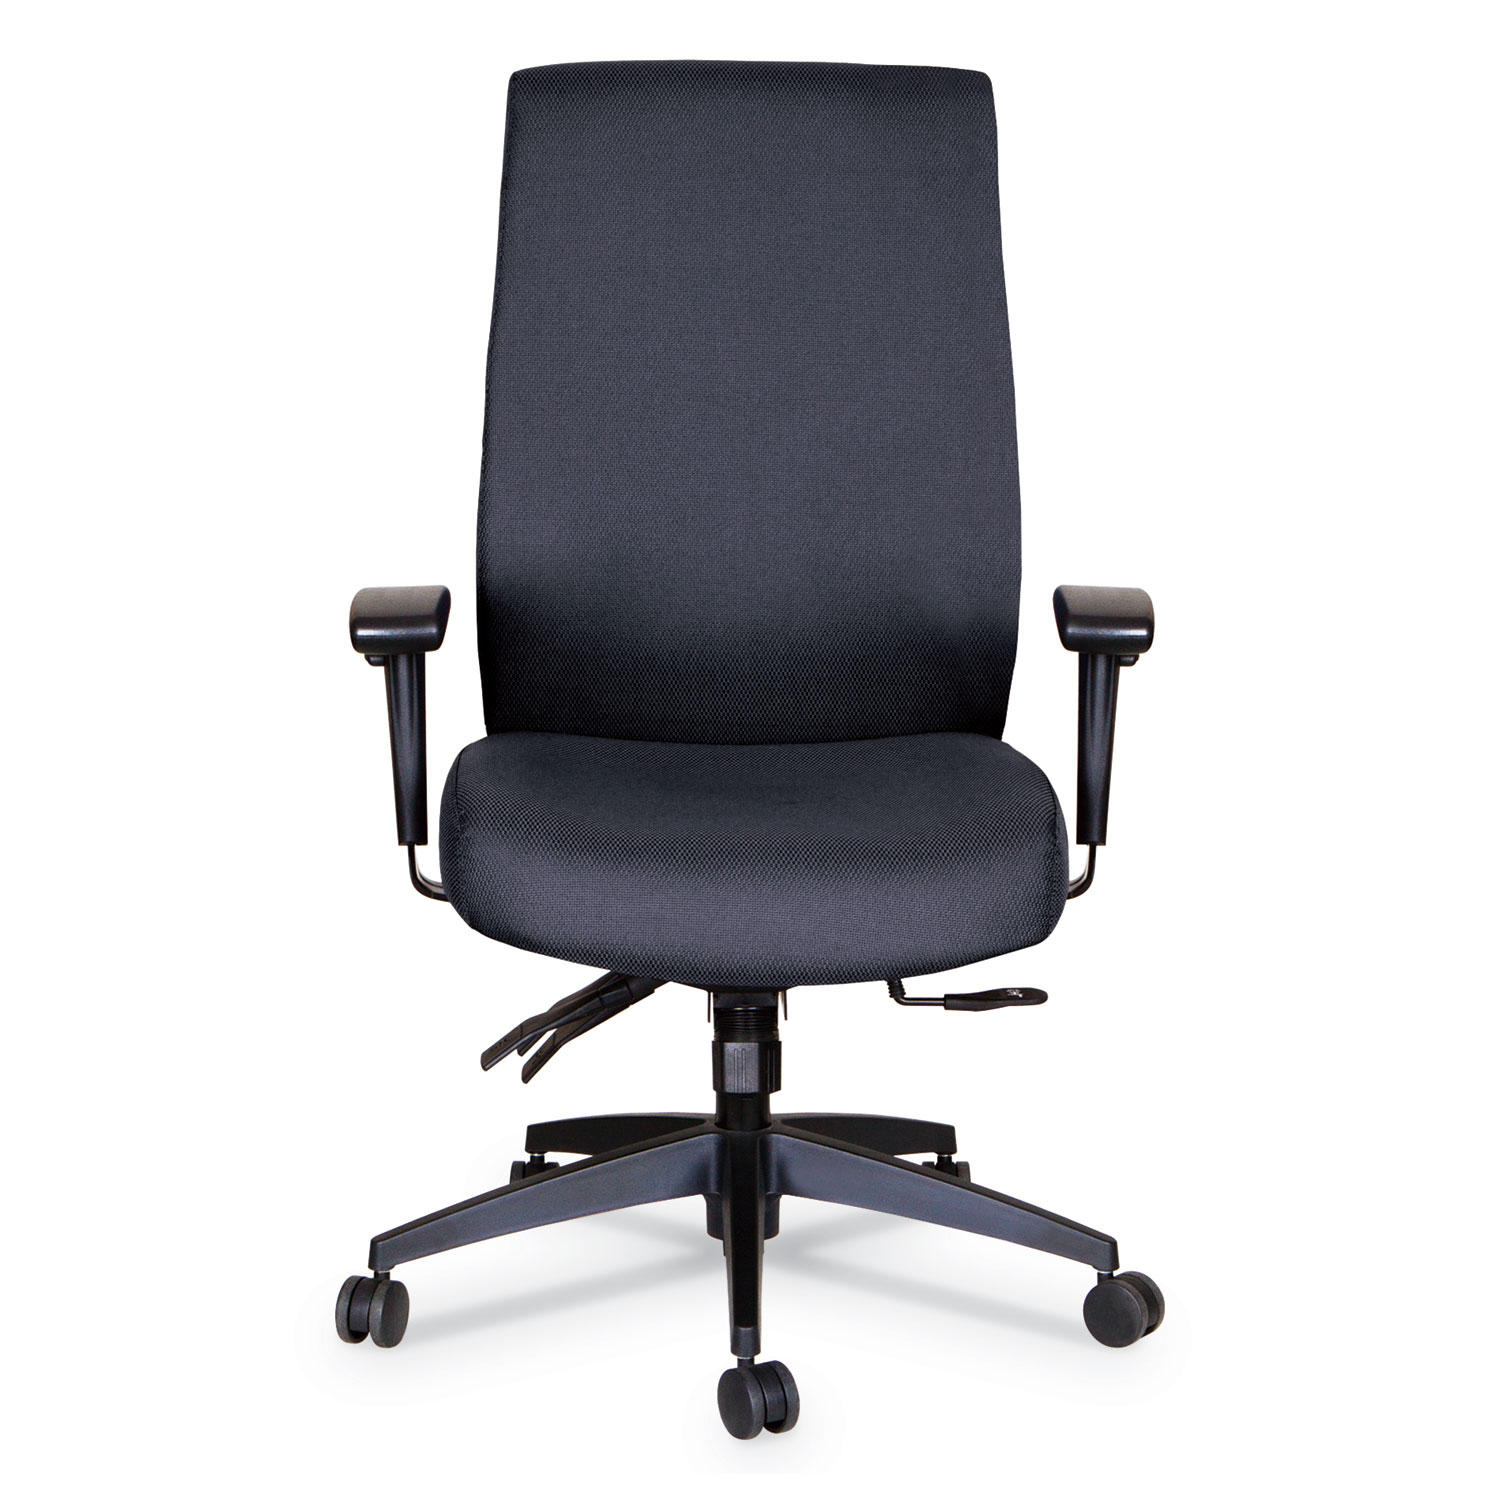 Alera Wrigley Series High Performance High-Back Multifunction Task Chair, Up to 275 lbs., Black Seat/Back, Black Base